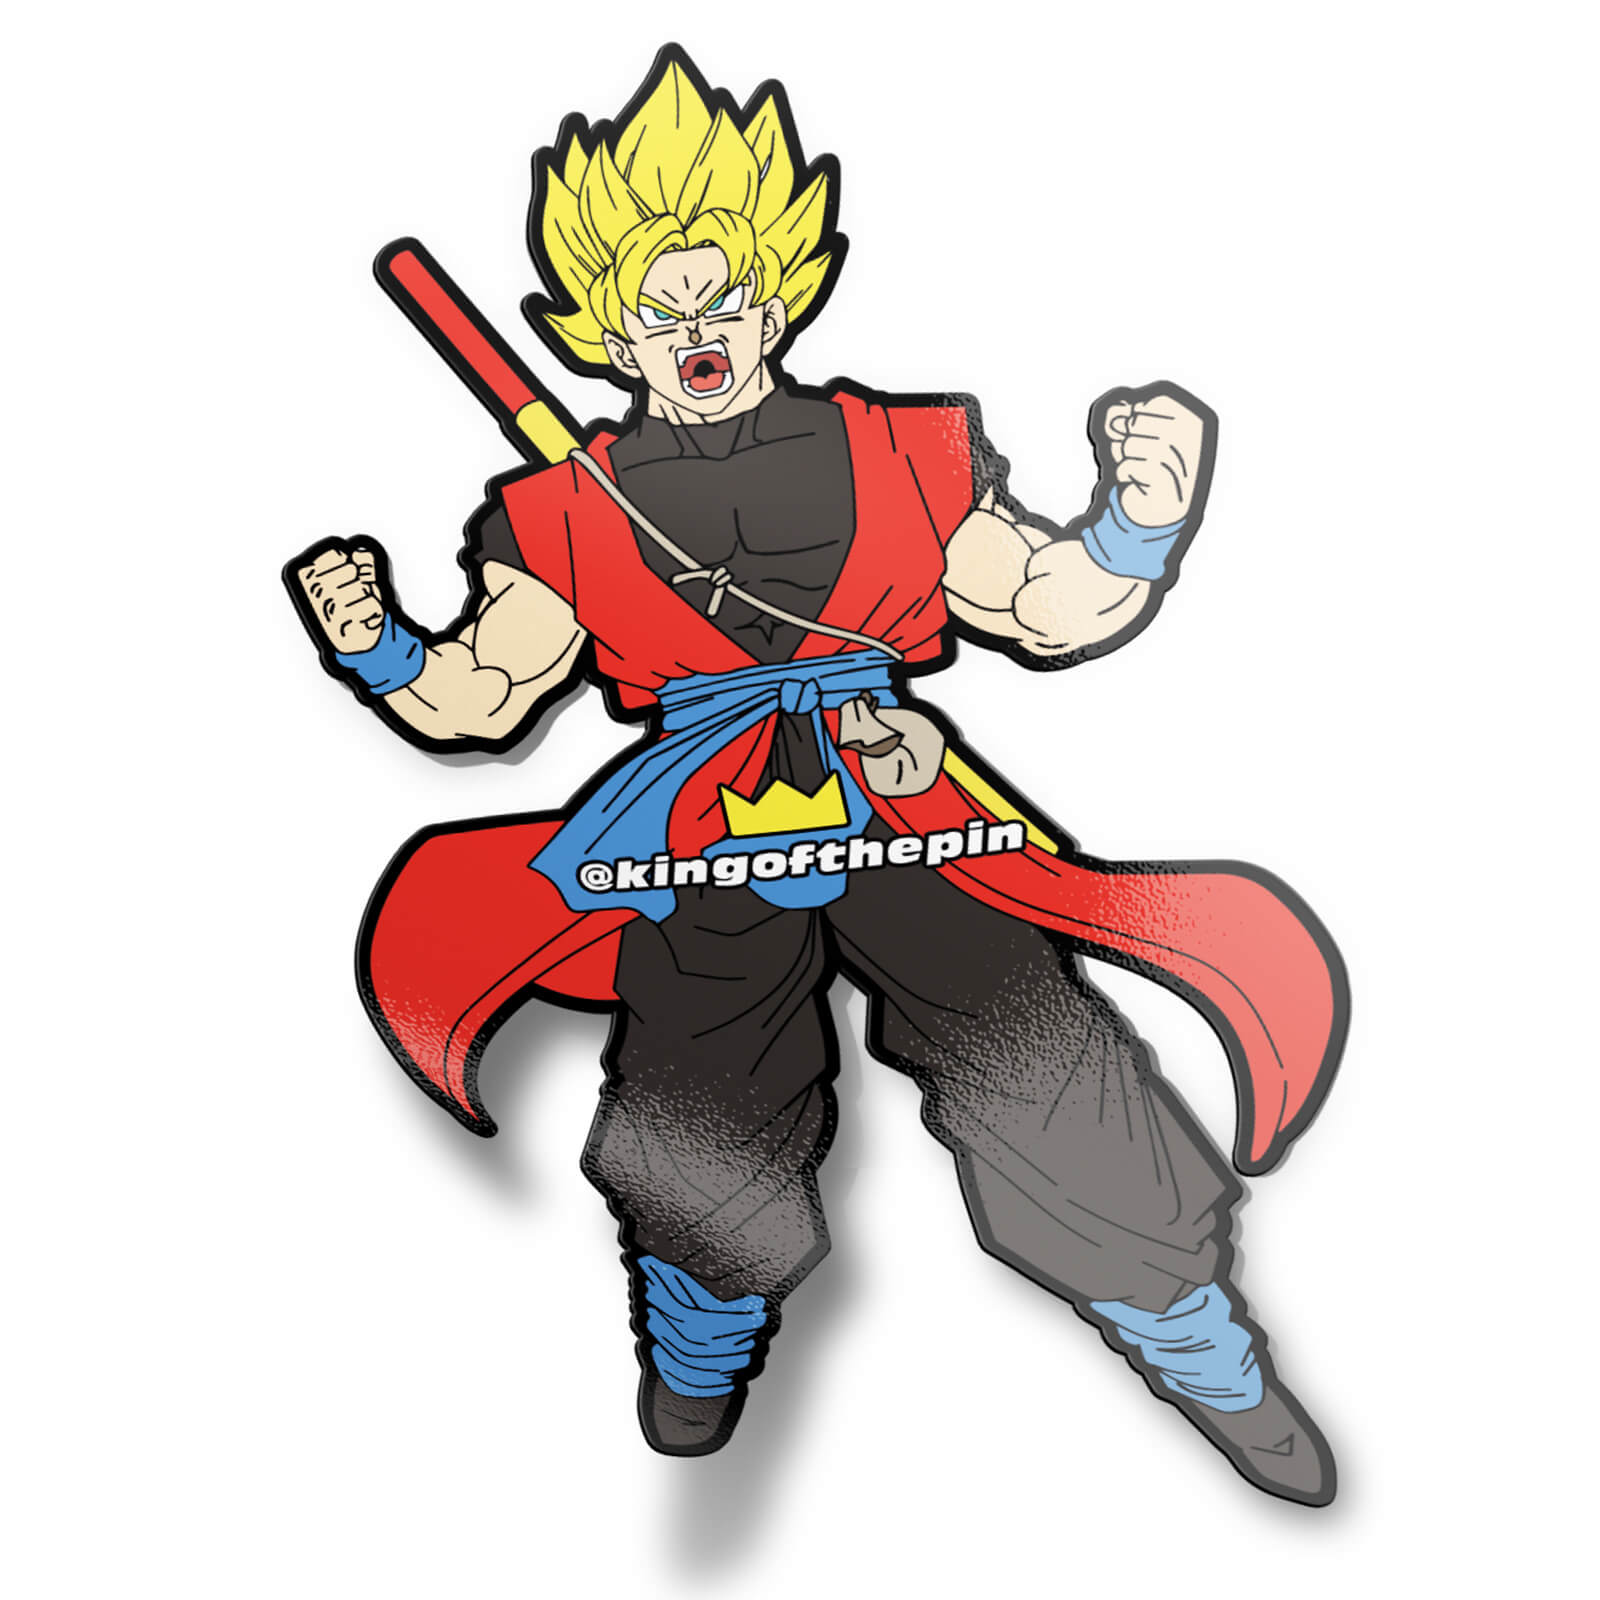 Super Saiyan 5 Gohan Sticker for Sale by uchiha-punx